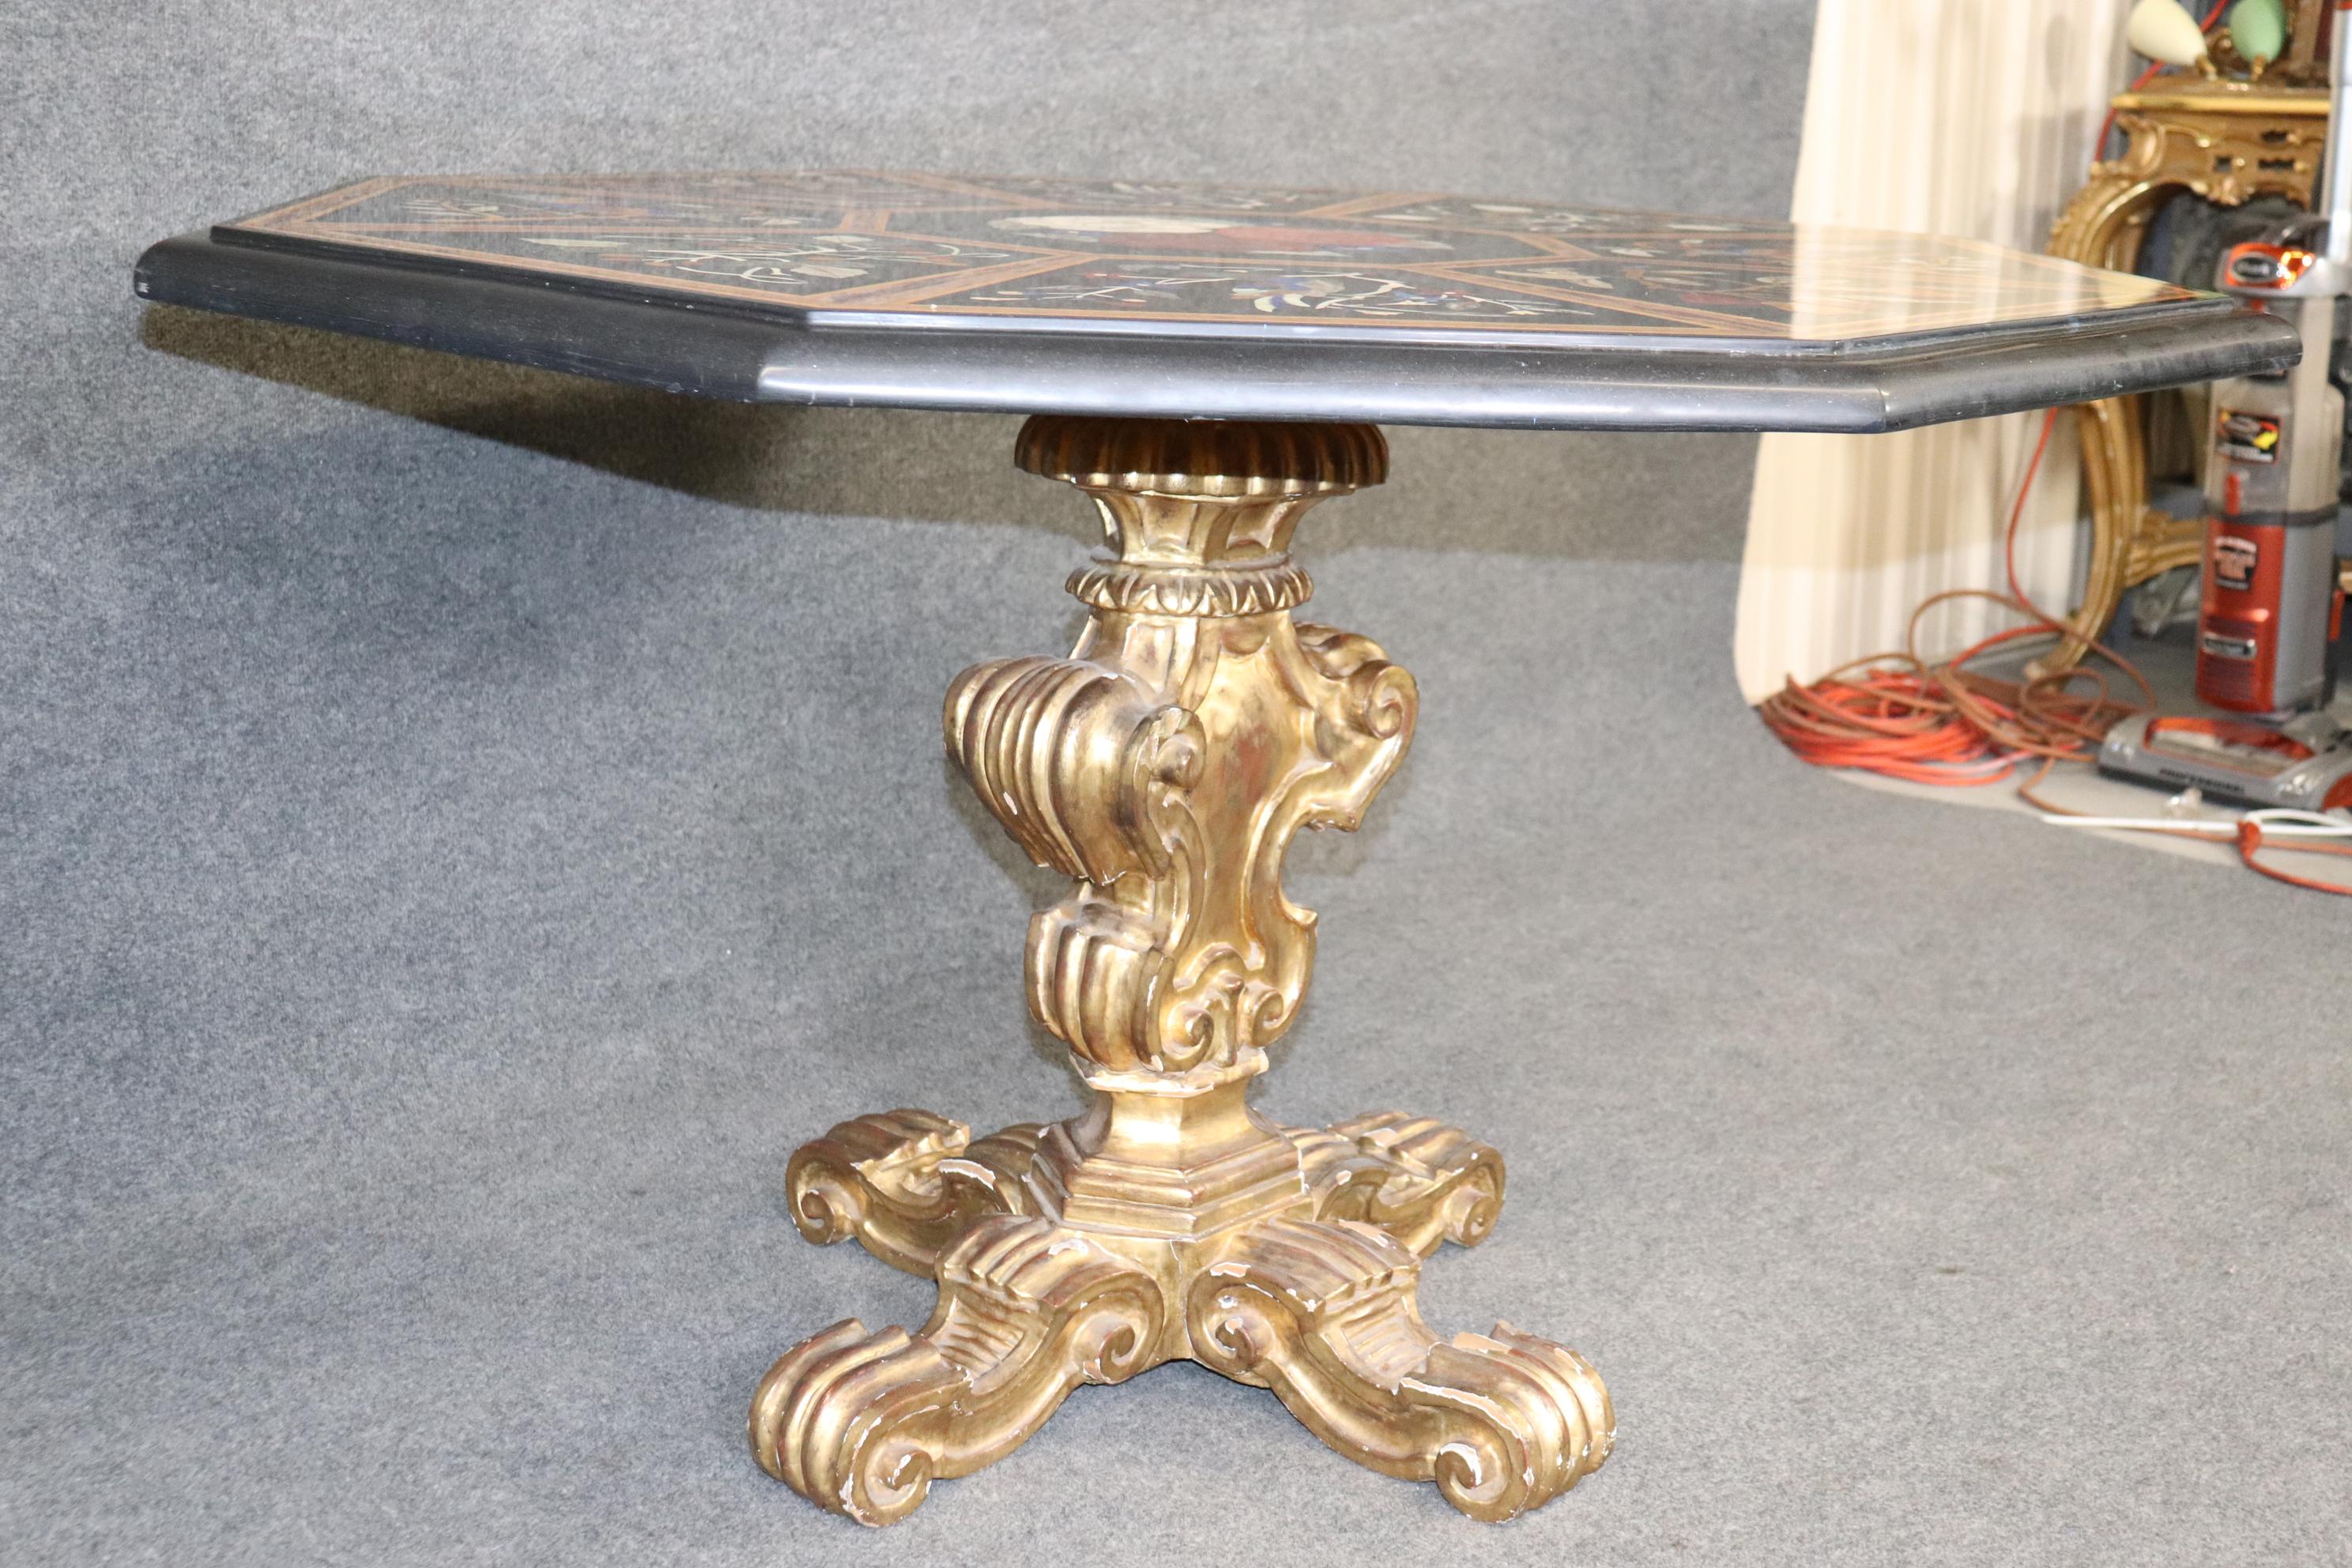 Italian Gilded Rococo Pietra Dura Inlaid Marble Top Center Table, circa 1950s For Sale 8